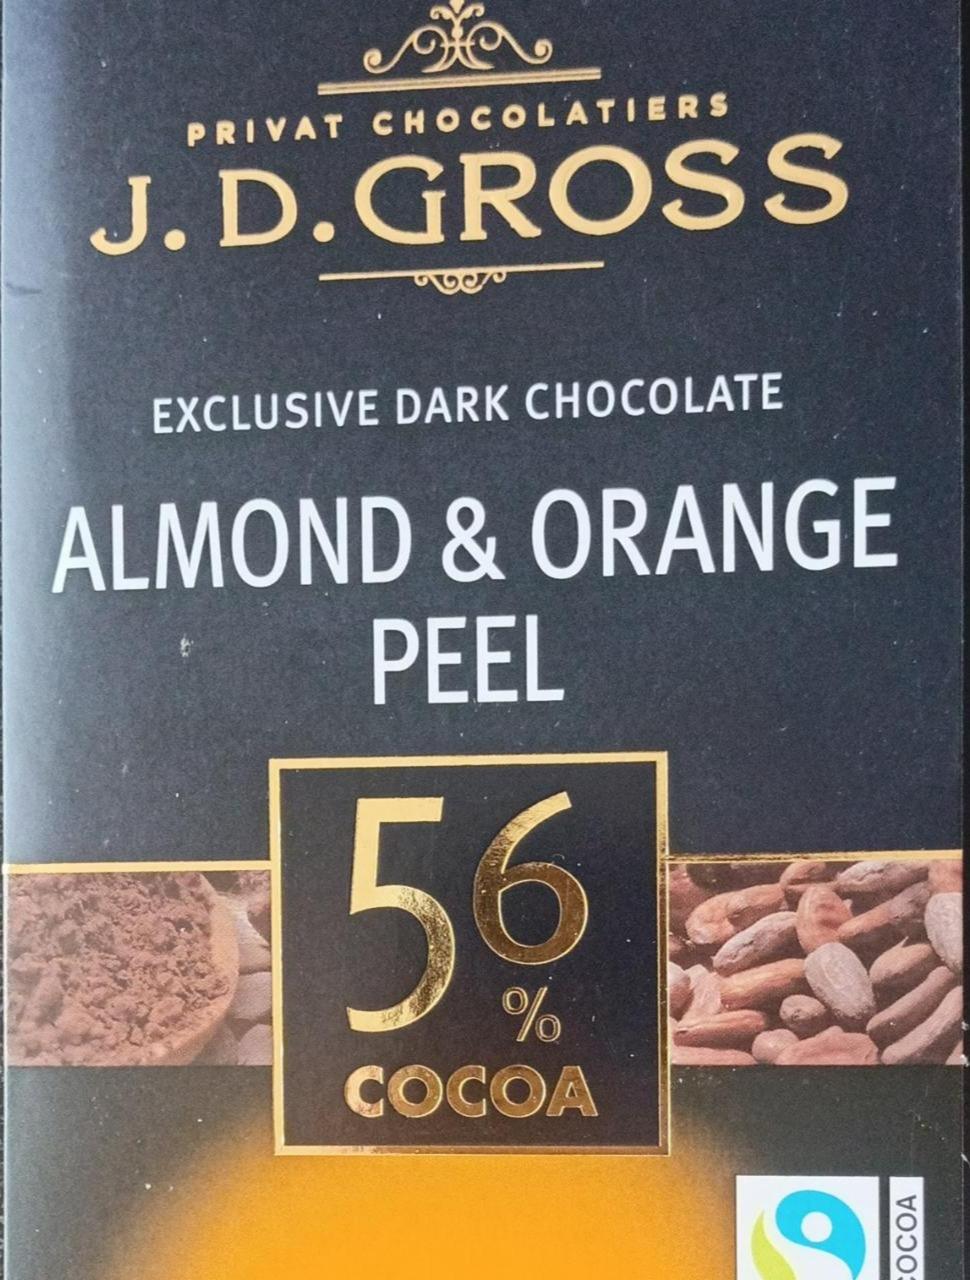 Fotografie - Almond & Orange peel 56% cocoa J. D. Gross